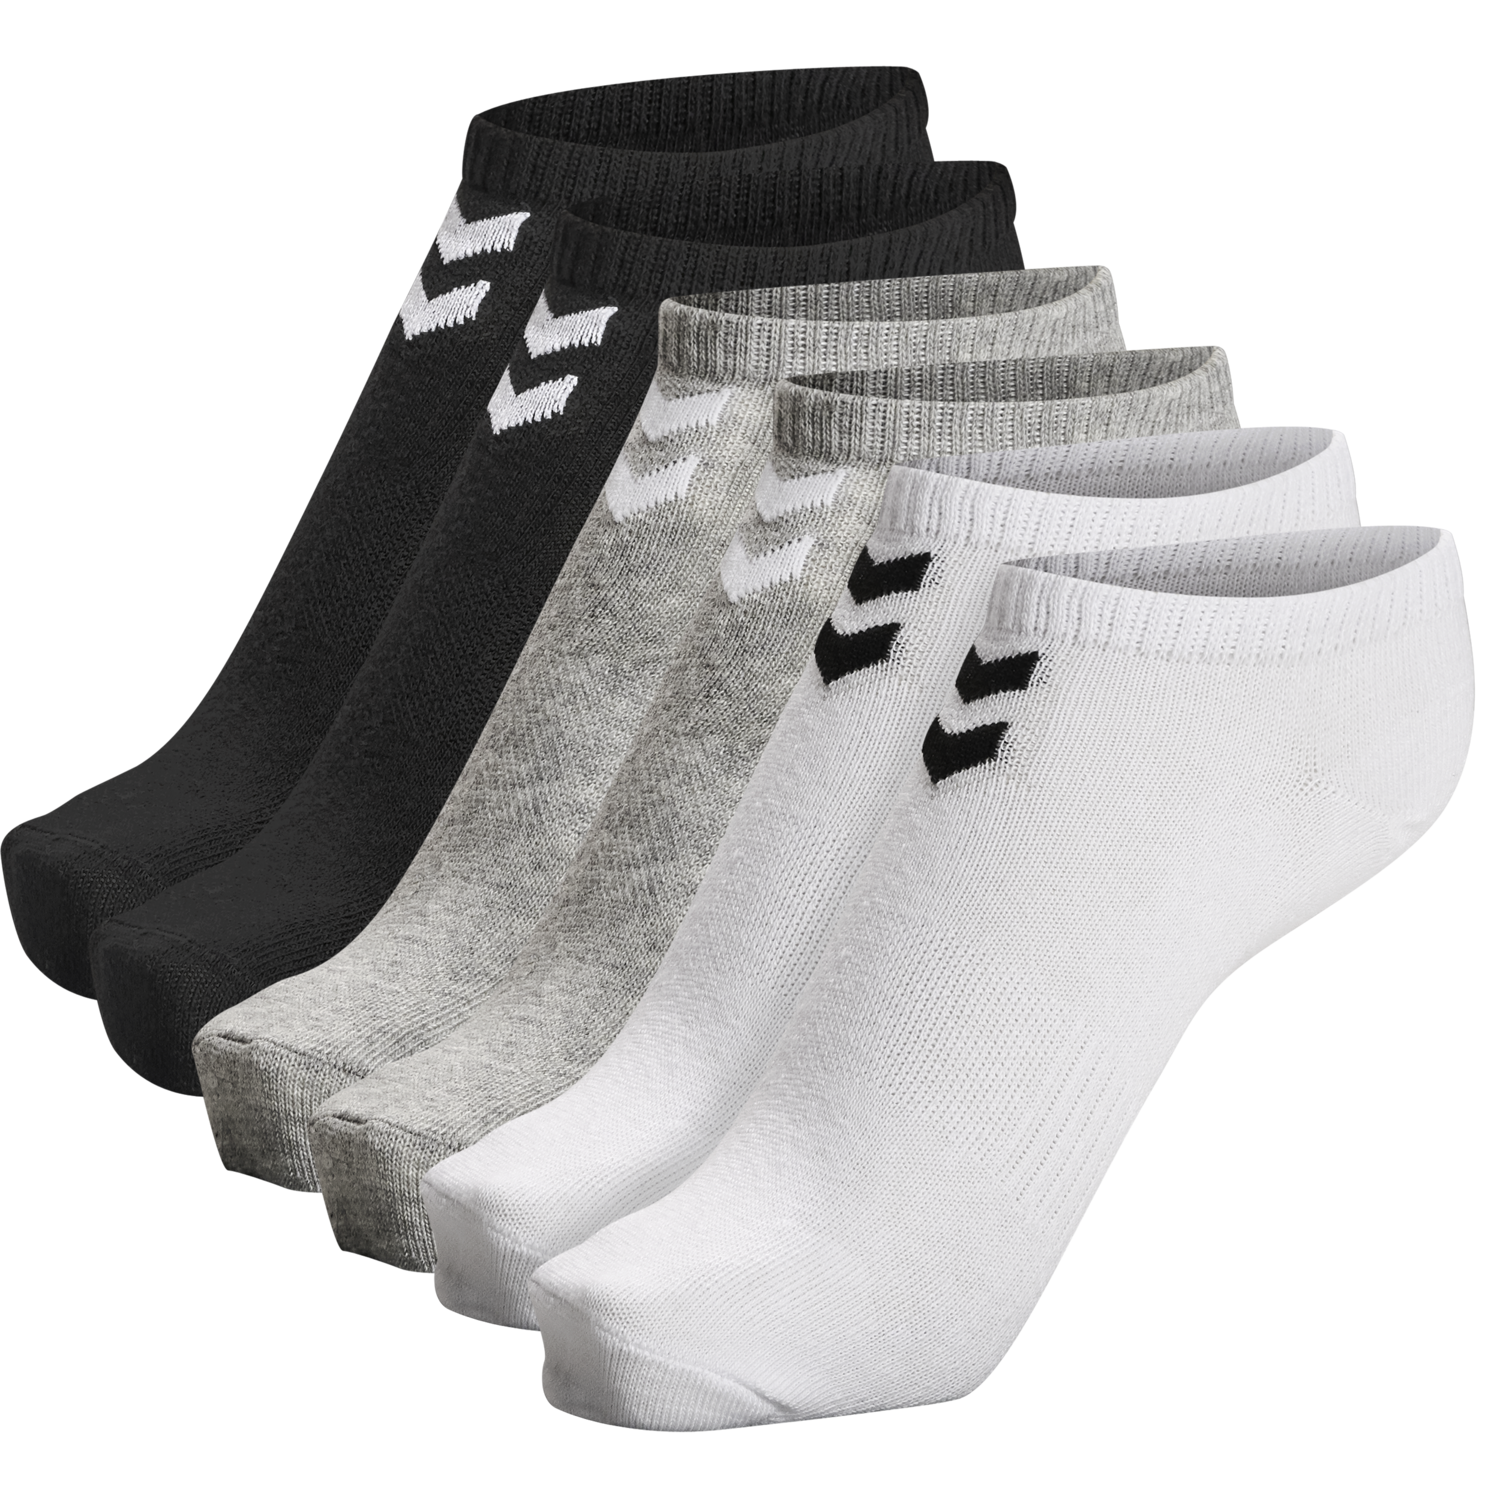 Hummel Sneaker Socken 6er Pack Ankle Socks Freizeit viele Farben Größe 36-48 TOP 